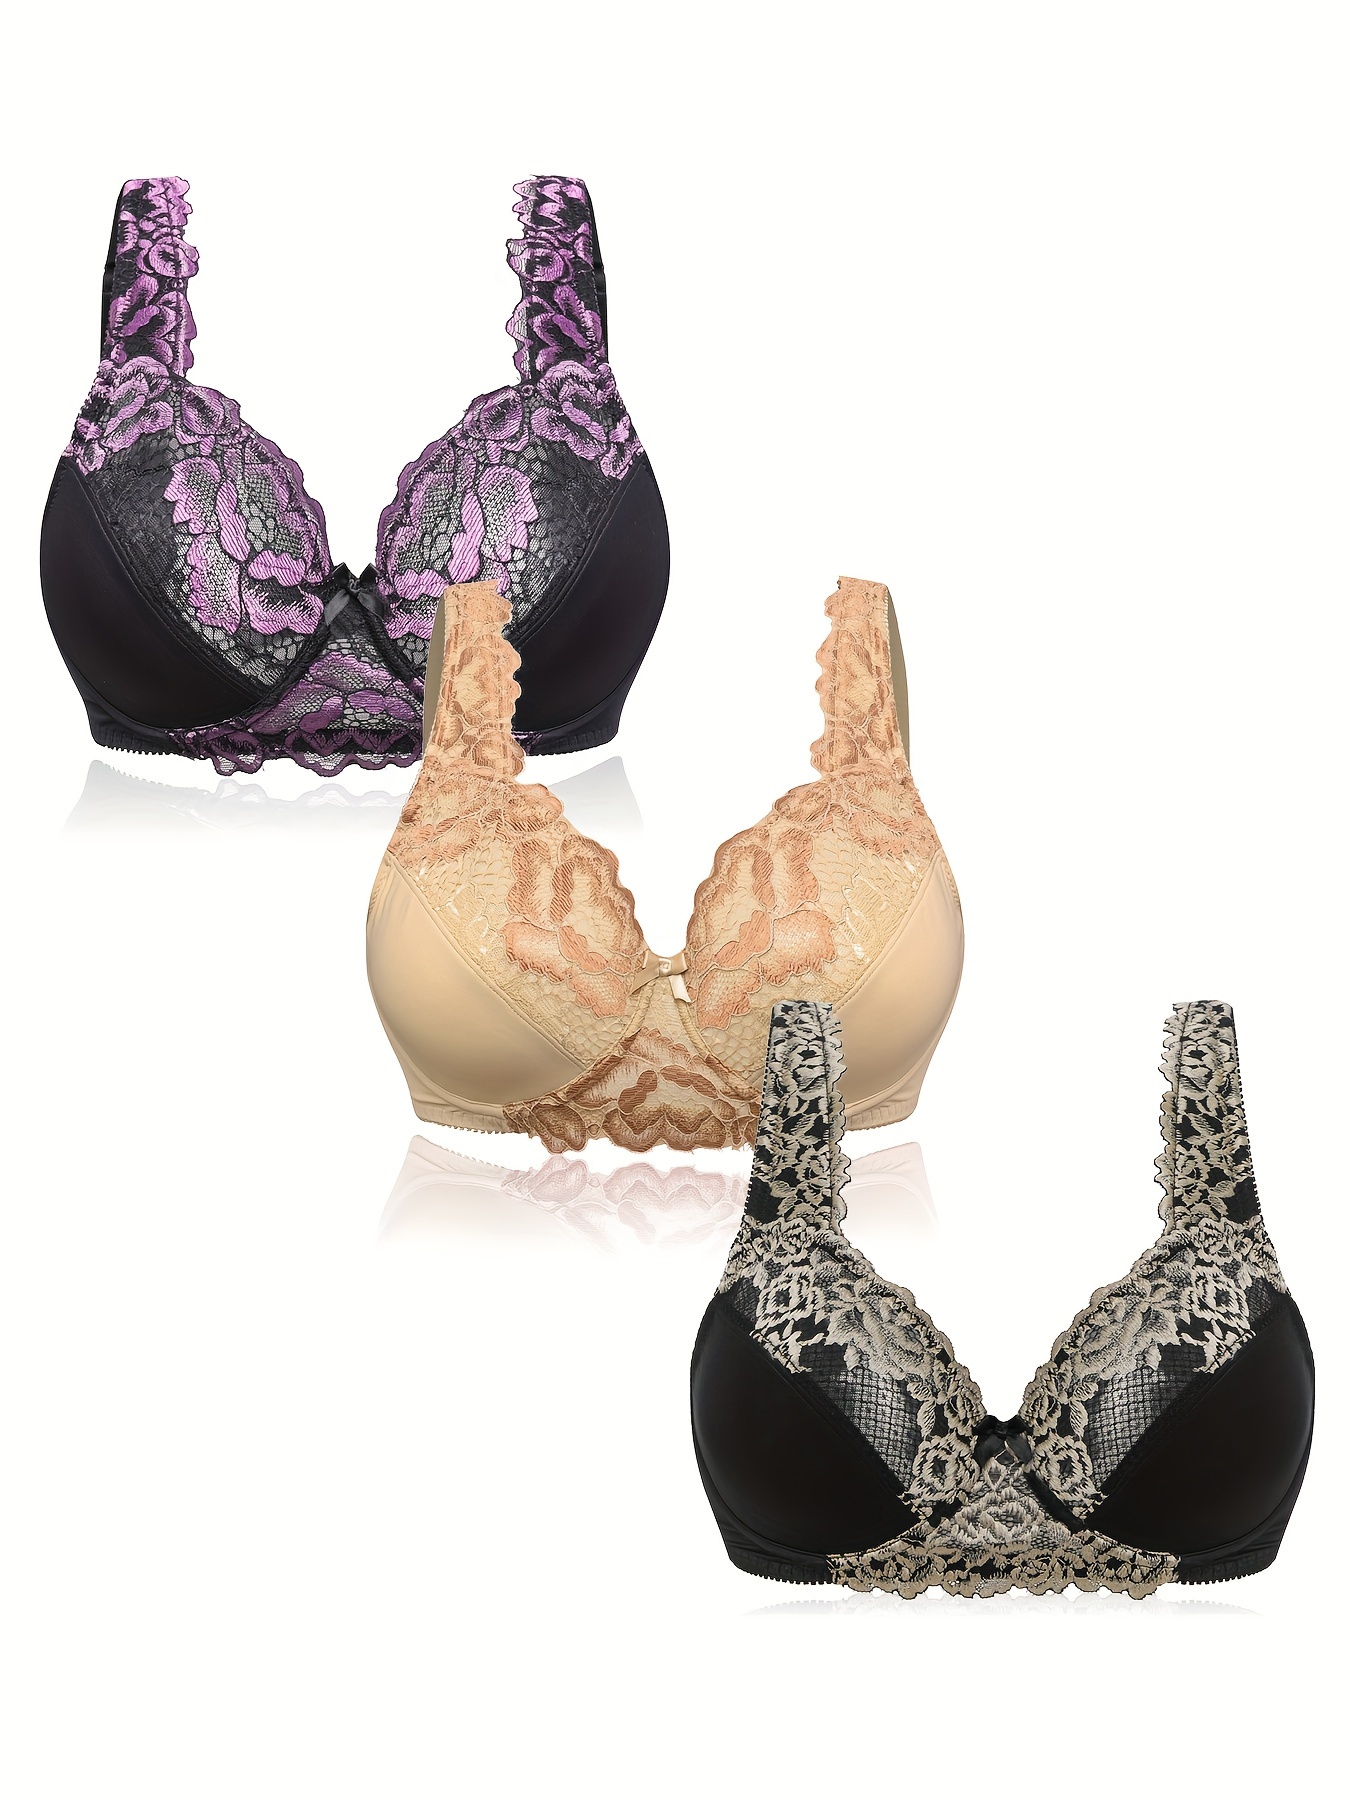 Sexy women's bra unlined d cup lingerie underwire bras plus size br